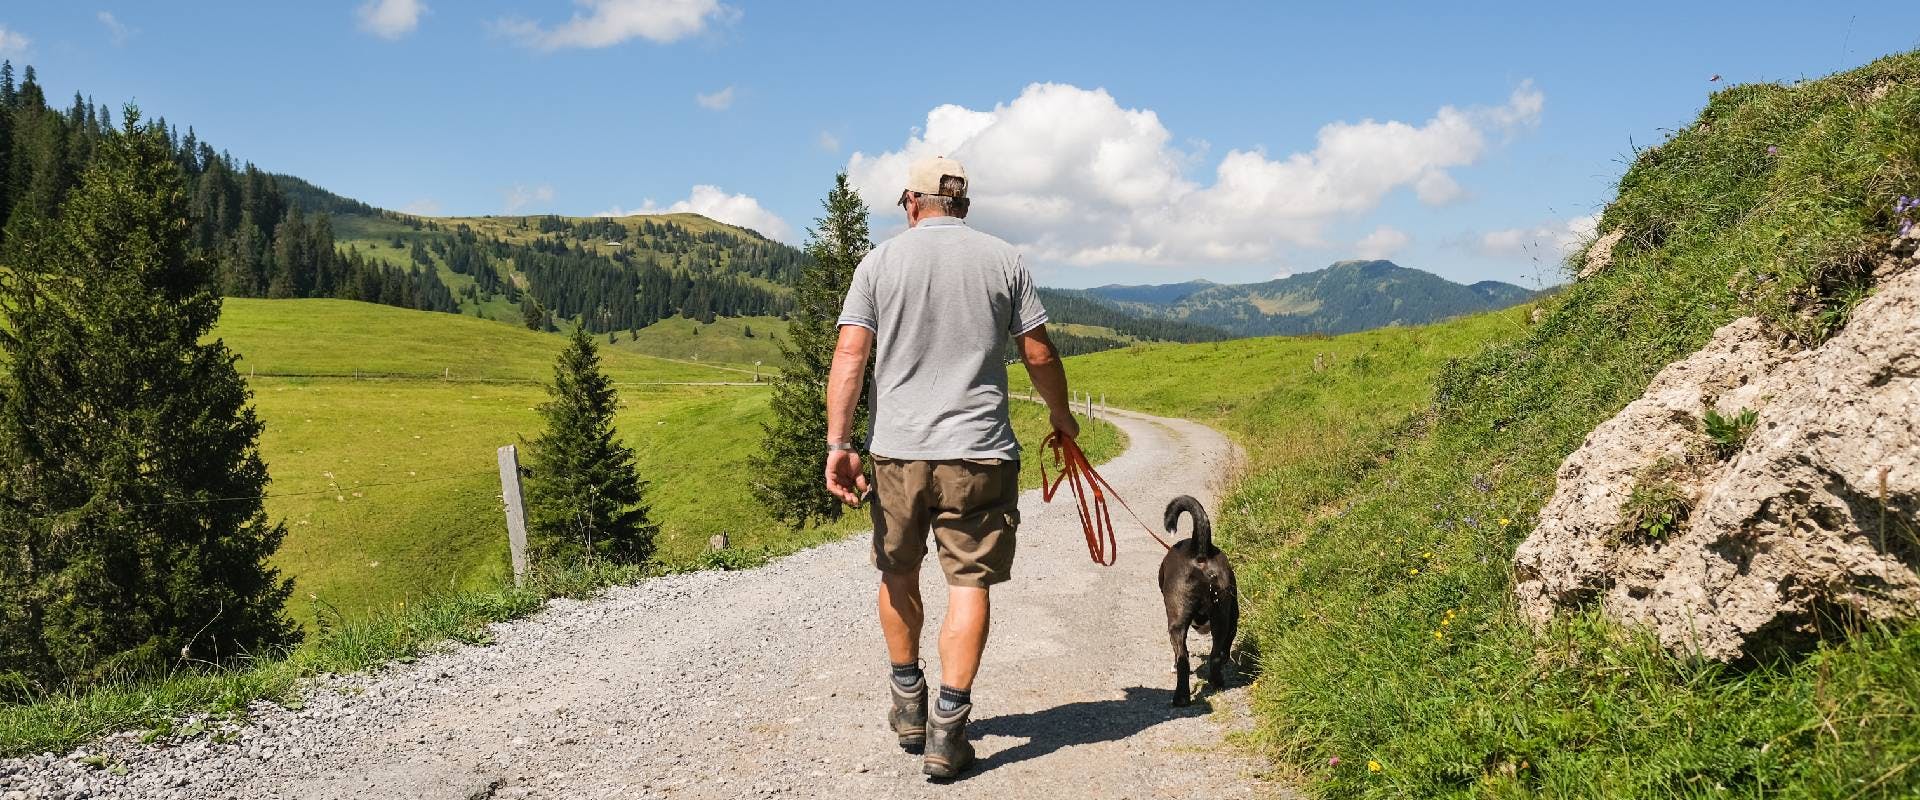 Man walking a dog in a mountainous area